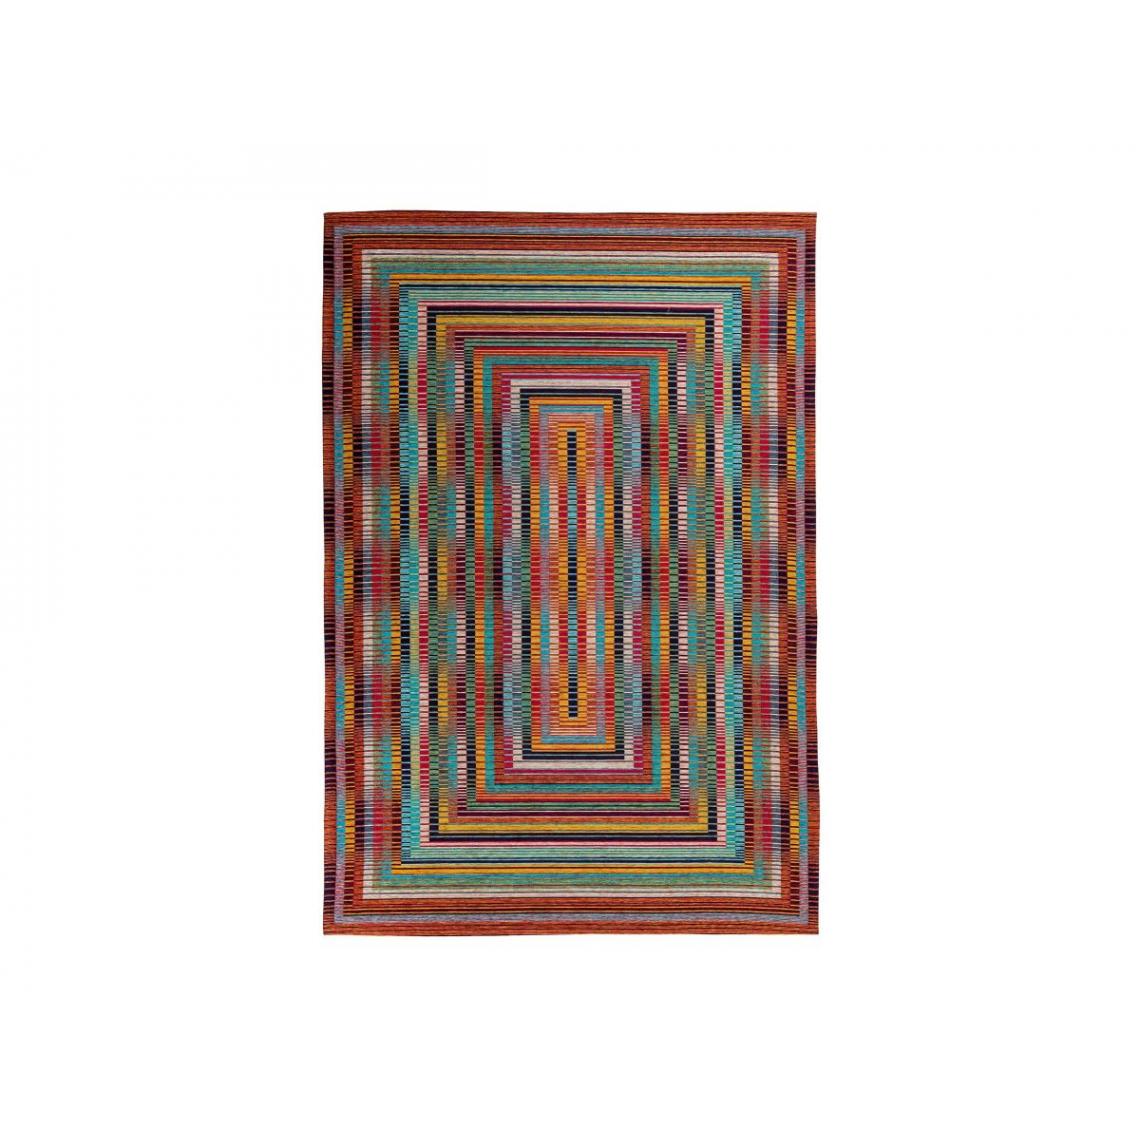 Bobochic - BOBOCHIC Tapis poil court rectangulaire CARRIA motif rayures multicolor Multicolore 160x230 - Tapis